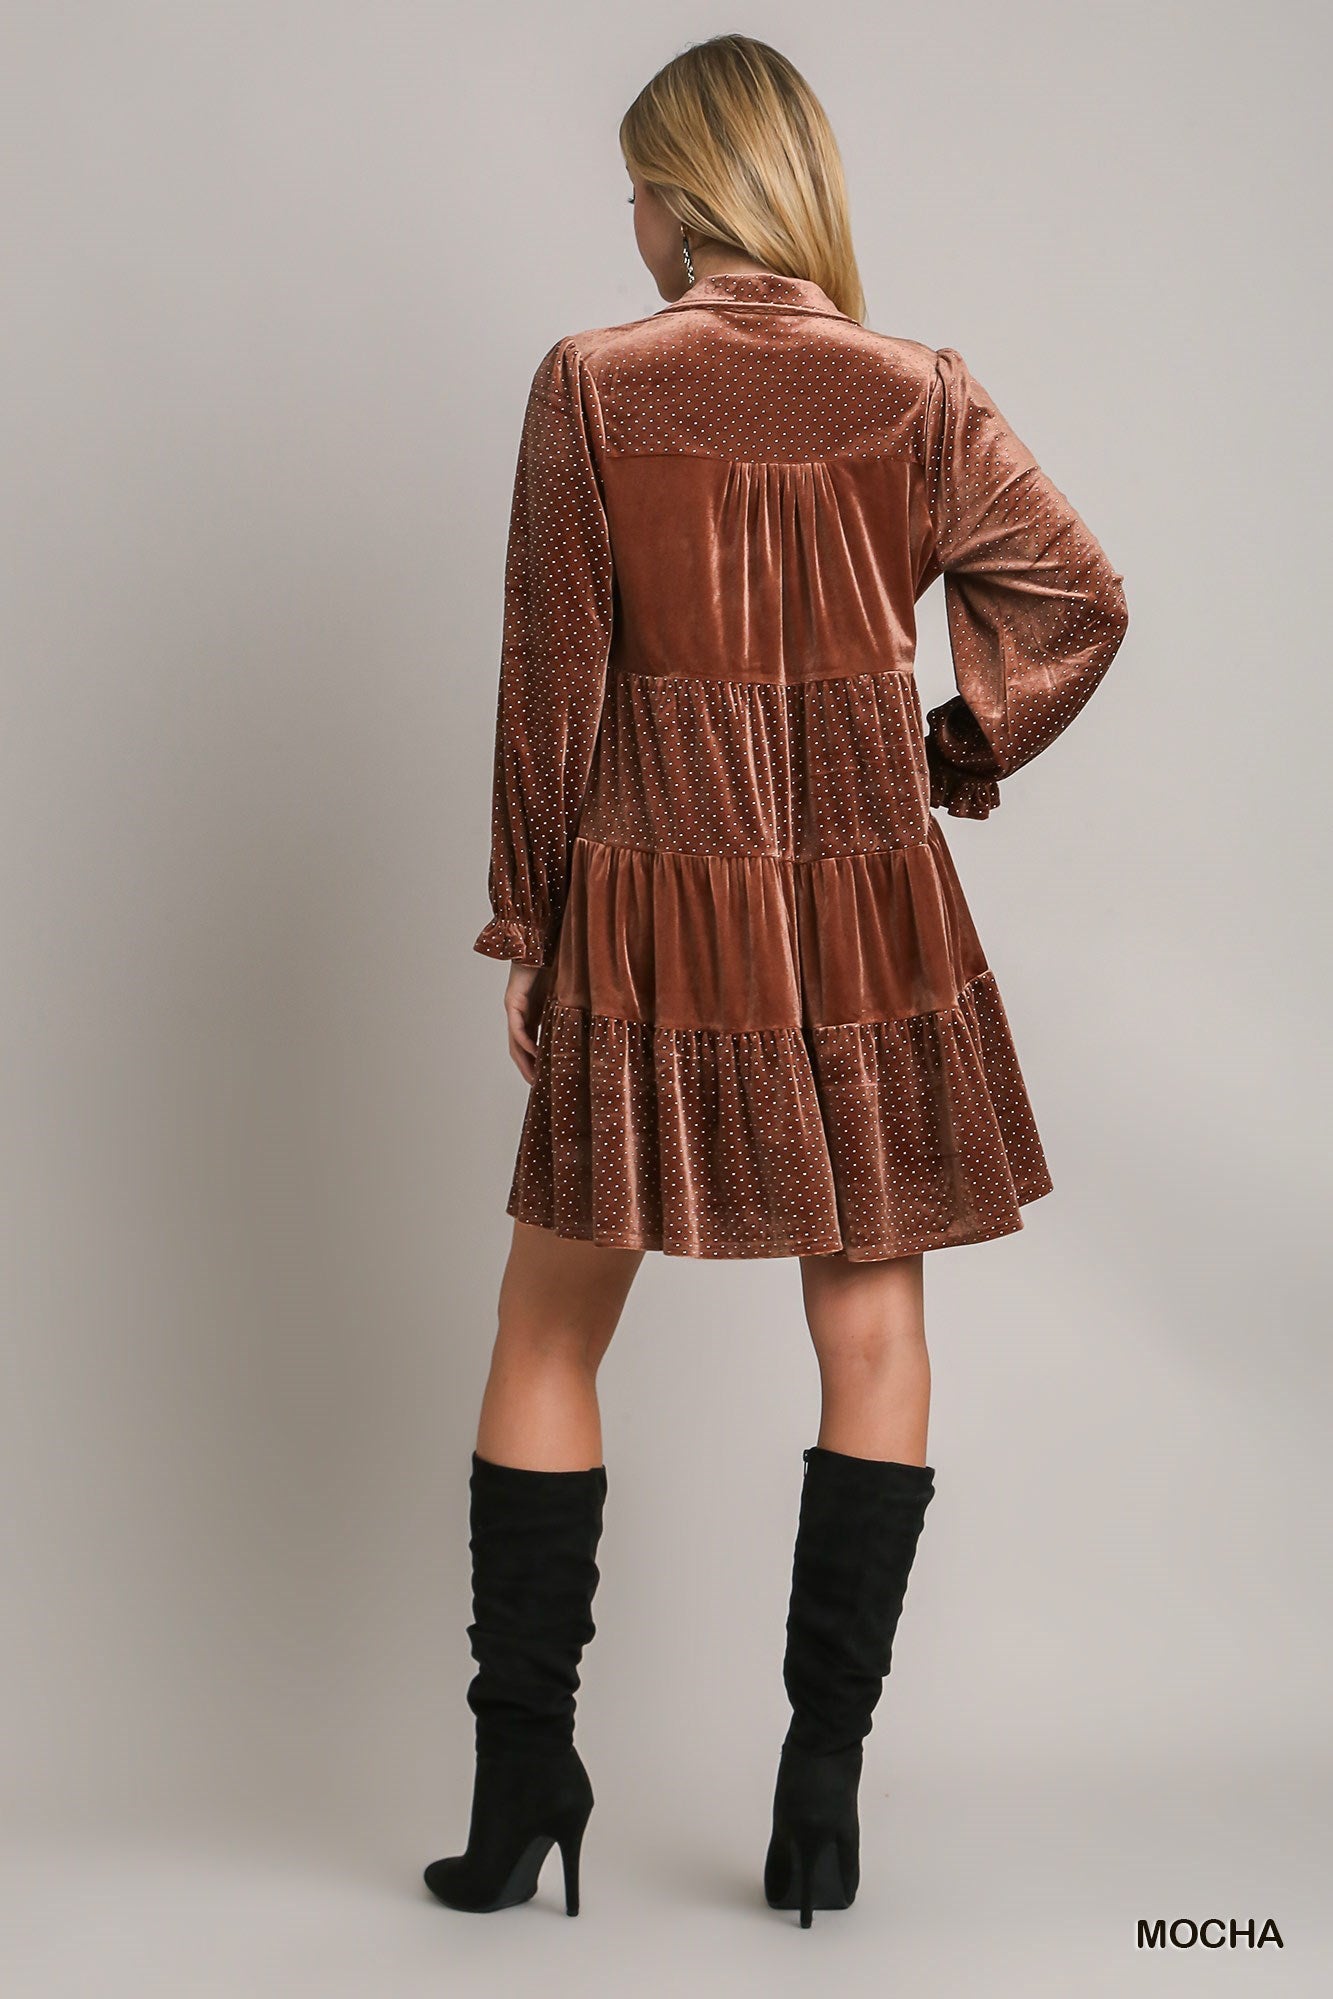 Mocha Velvet Tiered Dress w/ Rhinestone Details